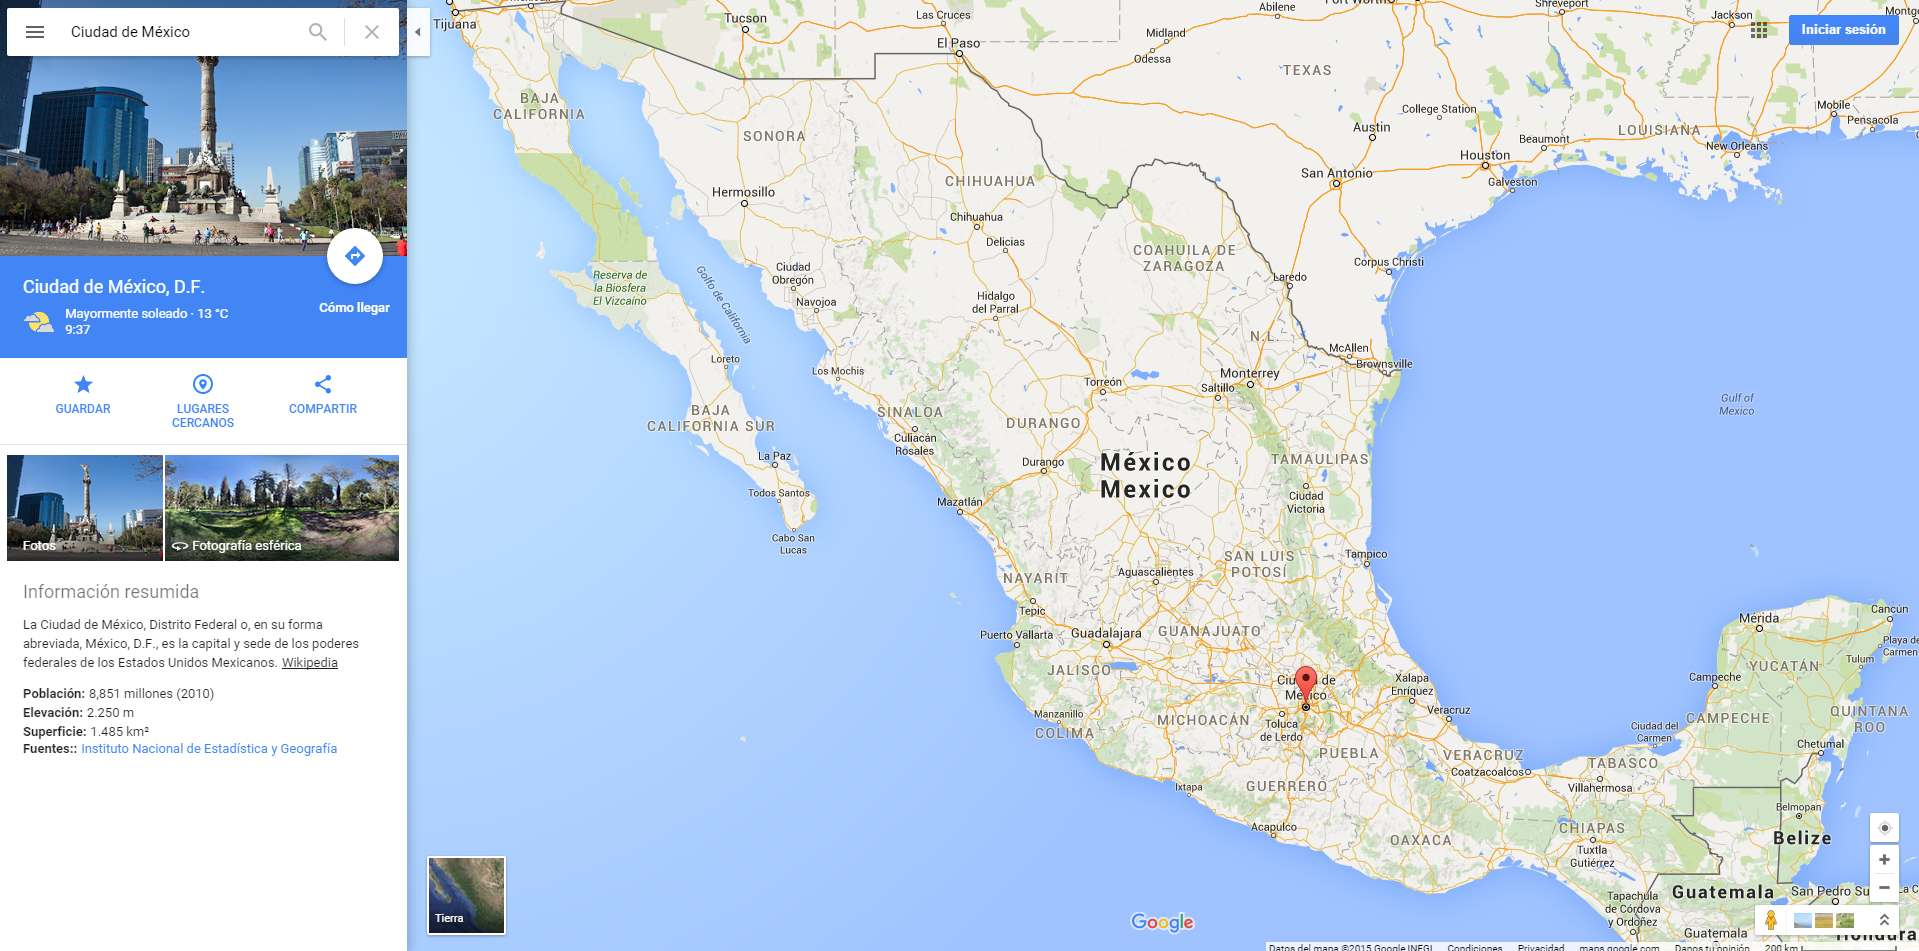 Google Maps San Diego California - Klipy - Google Maps San Diego California